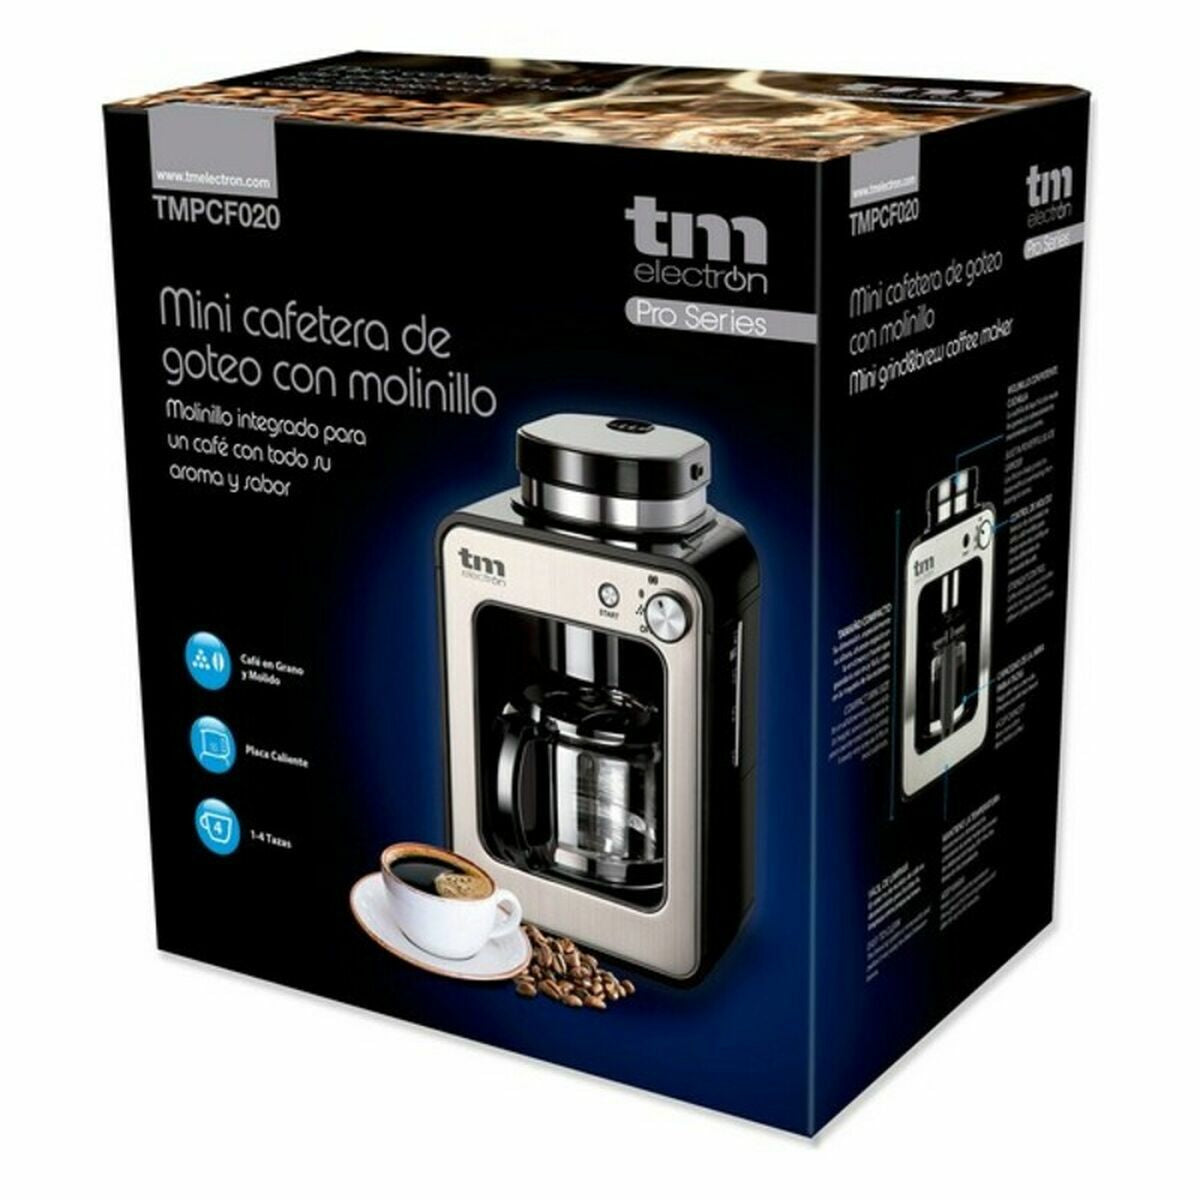 Filterkaffeemaschine TMPCF020S 600 W 4 Kopper 600W - CA International 